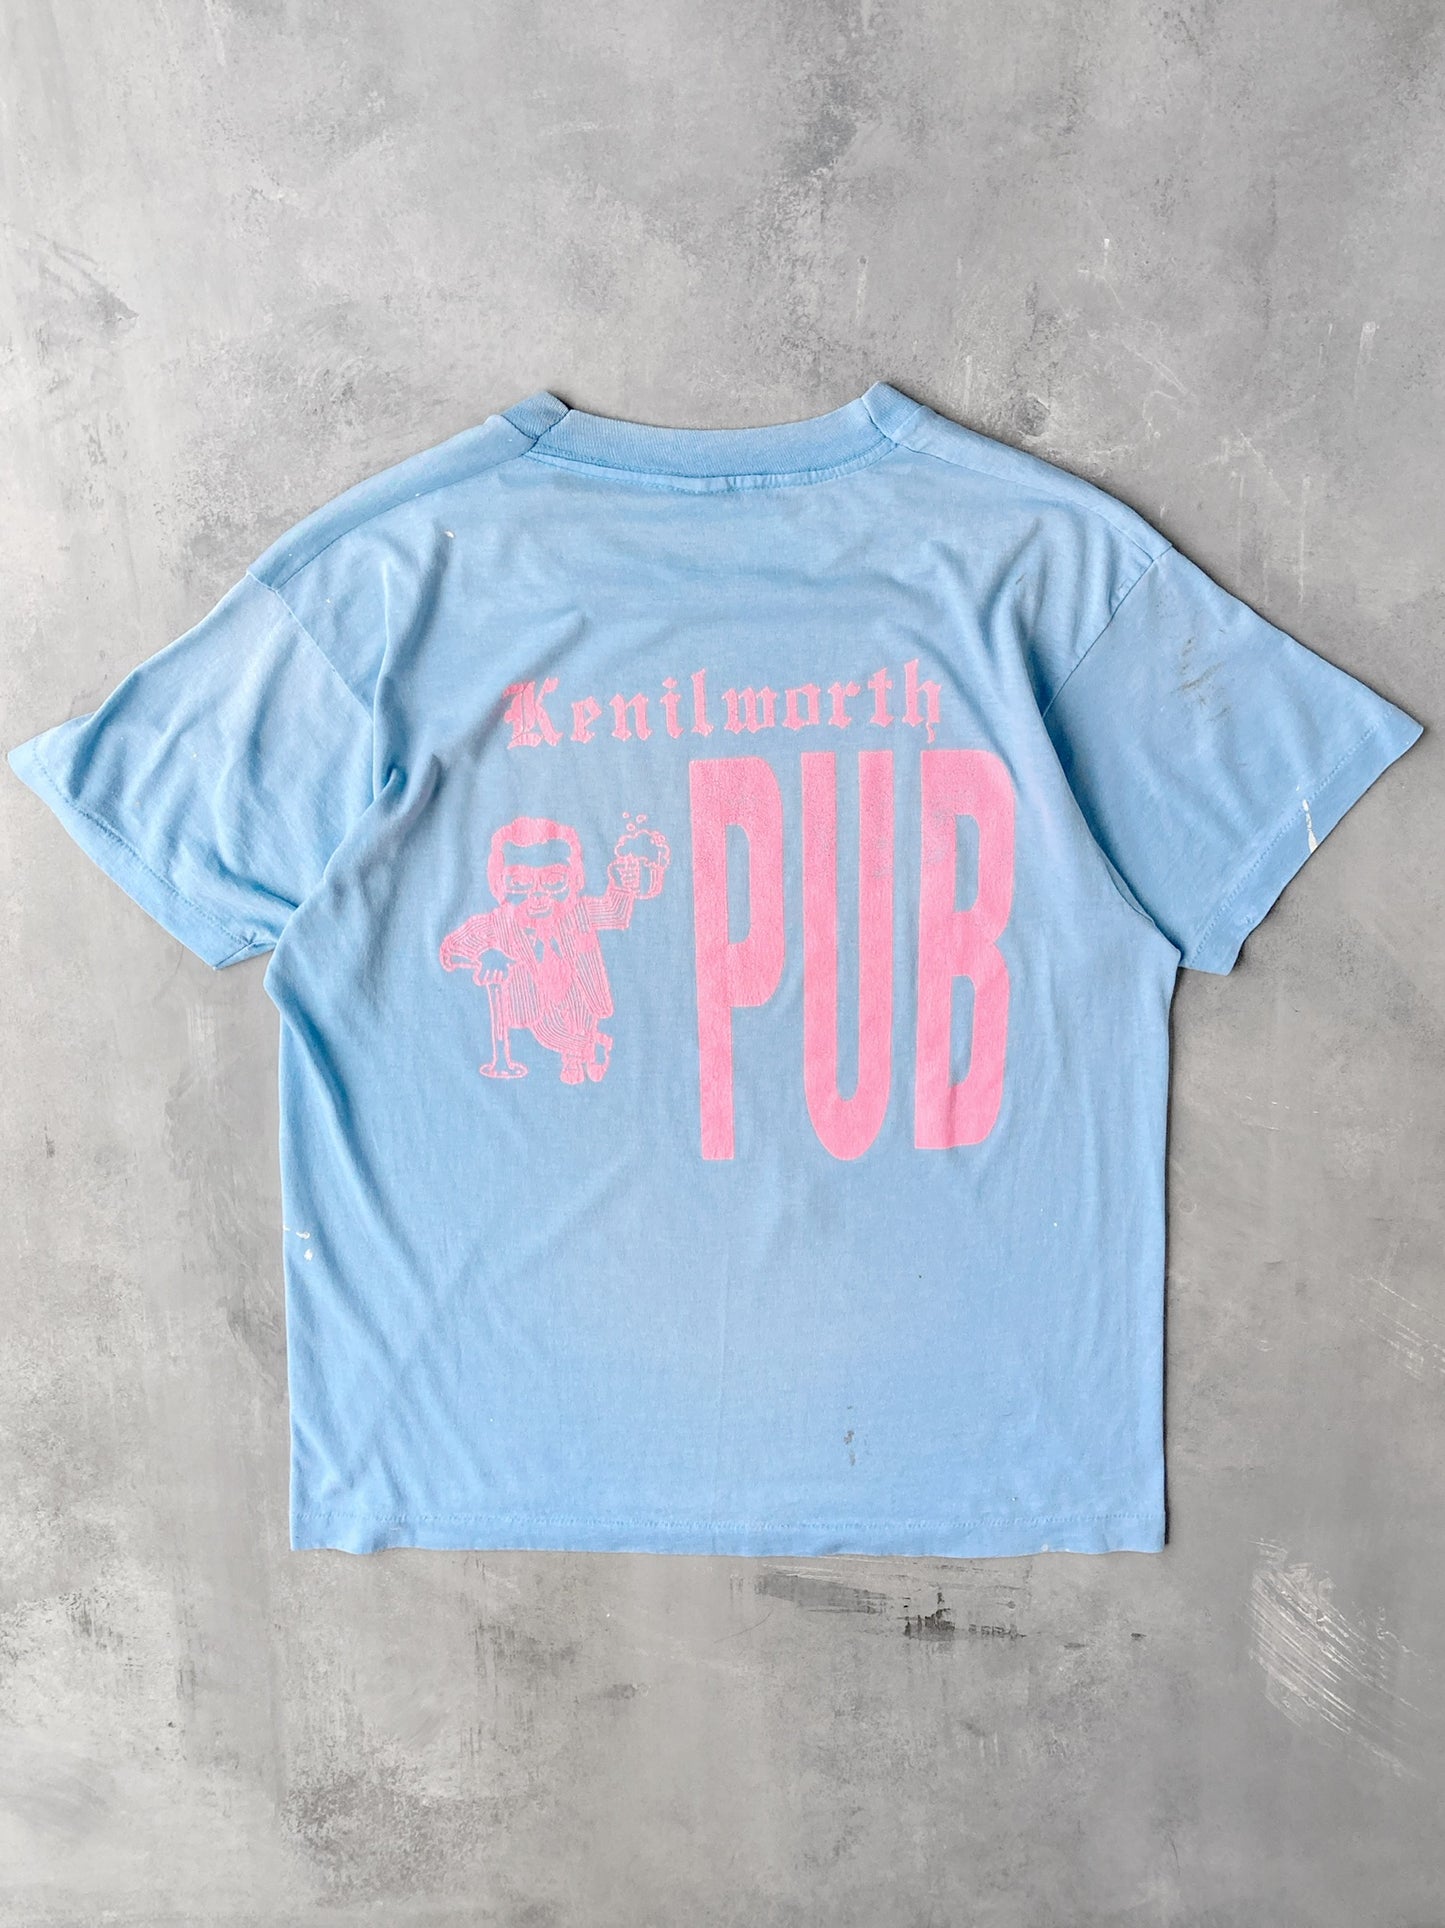 Kenilworth Pub Jim Beam T-Shirt 80's - Large